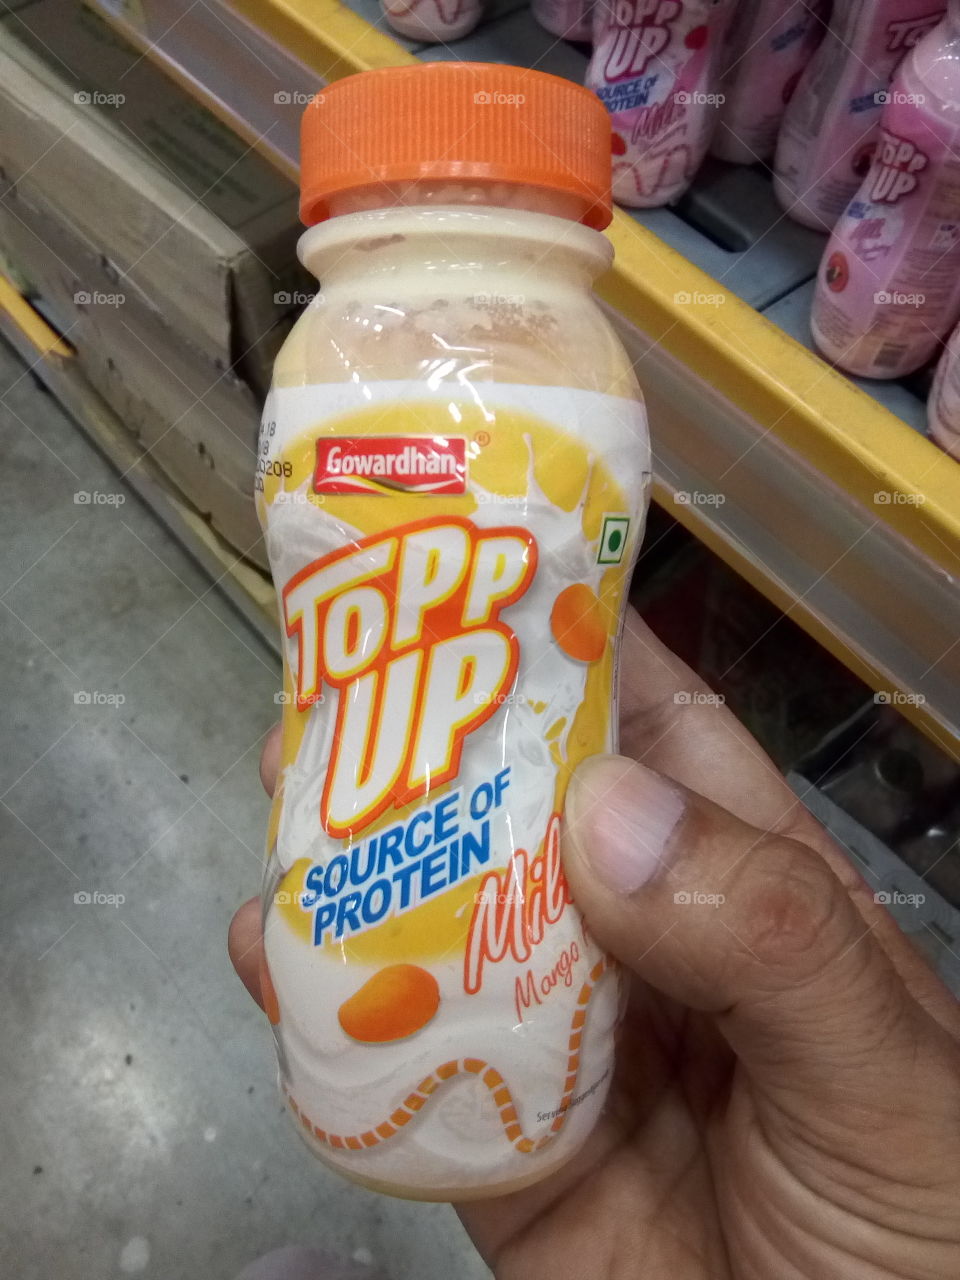 Topp up mango flavor milk. A source of protein.